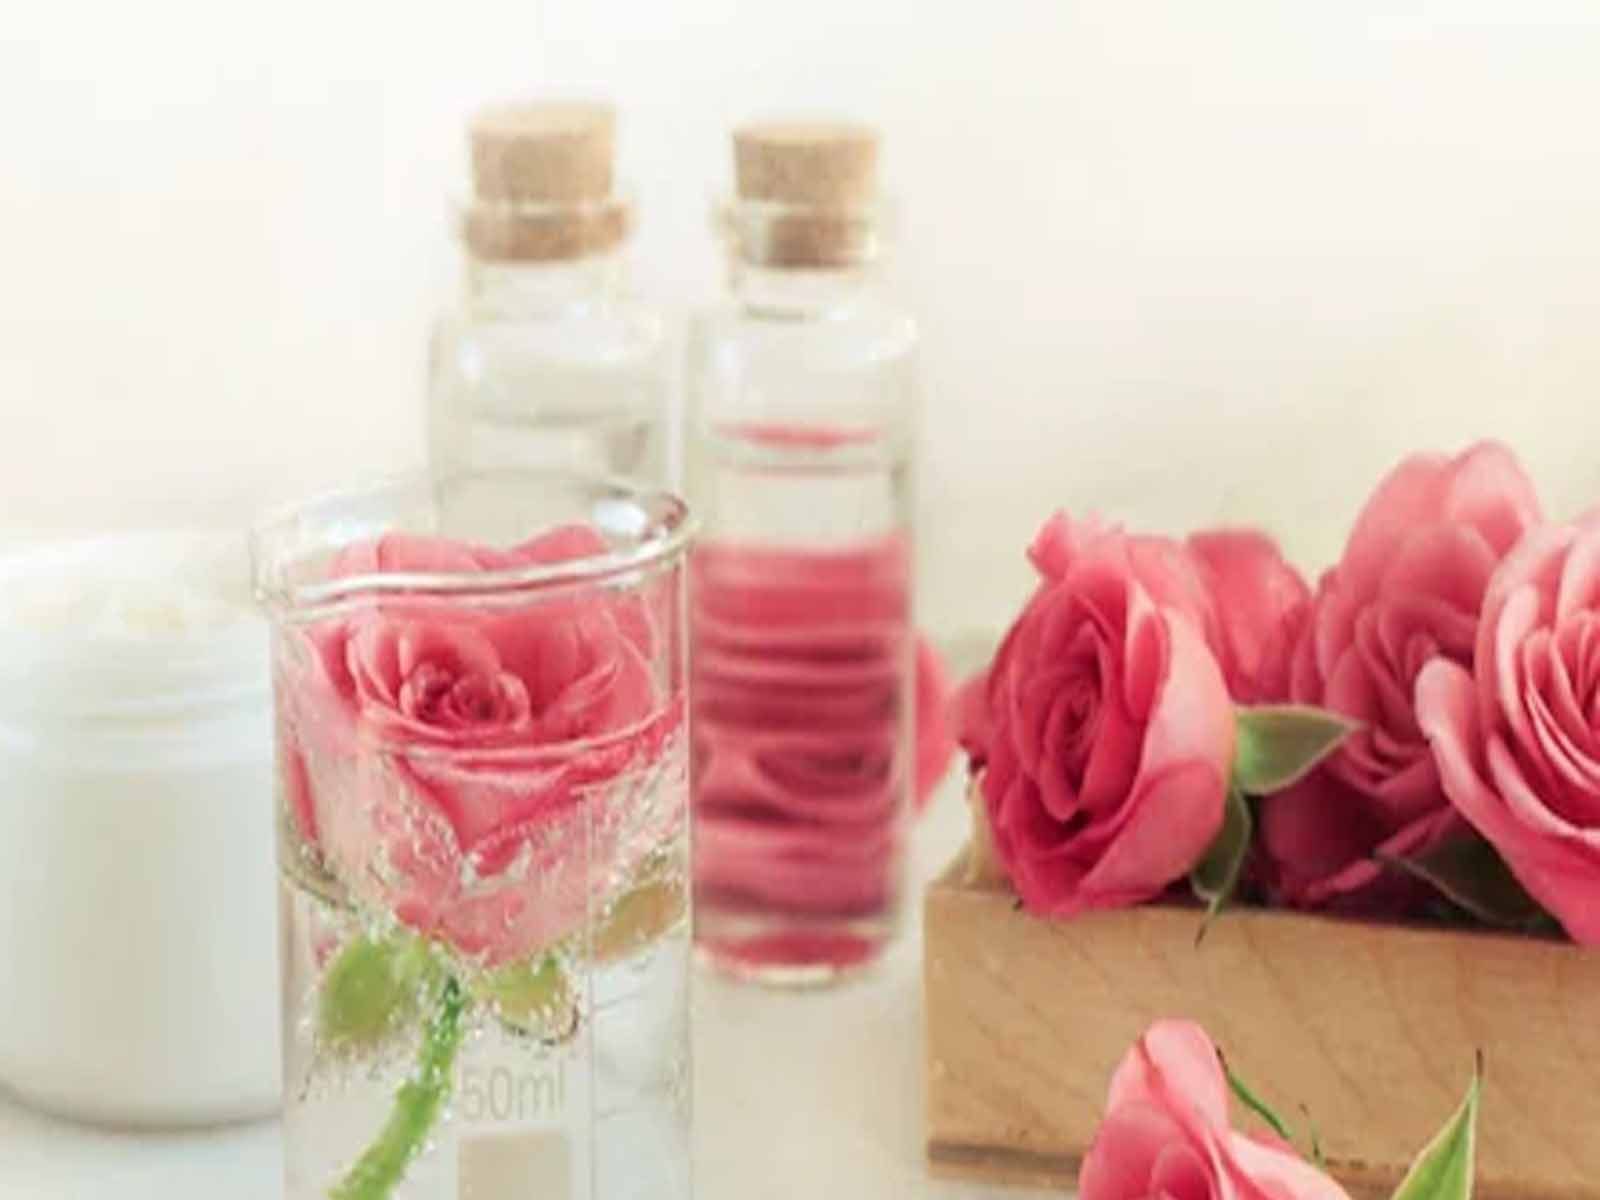  Rose Water Benefits: ਗੁਲਾਬ ਜਲ ਸਕਿਨ ਦੇ ਨਾਲ ਵਾਲਾਂ ਲਈ ਵੀ ਹੈ ਲਾਭਦਾਇਕ, ਇਸ ਤਰ੍ਹਾਂ ਕਰੋ ਵਰਤੋਂ